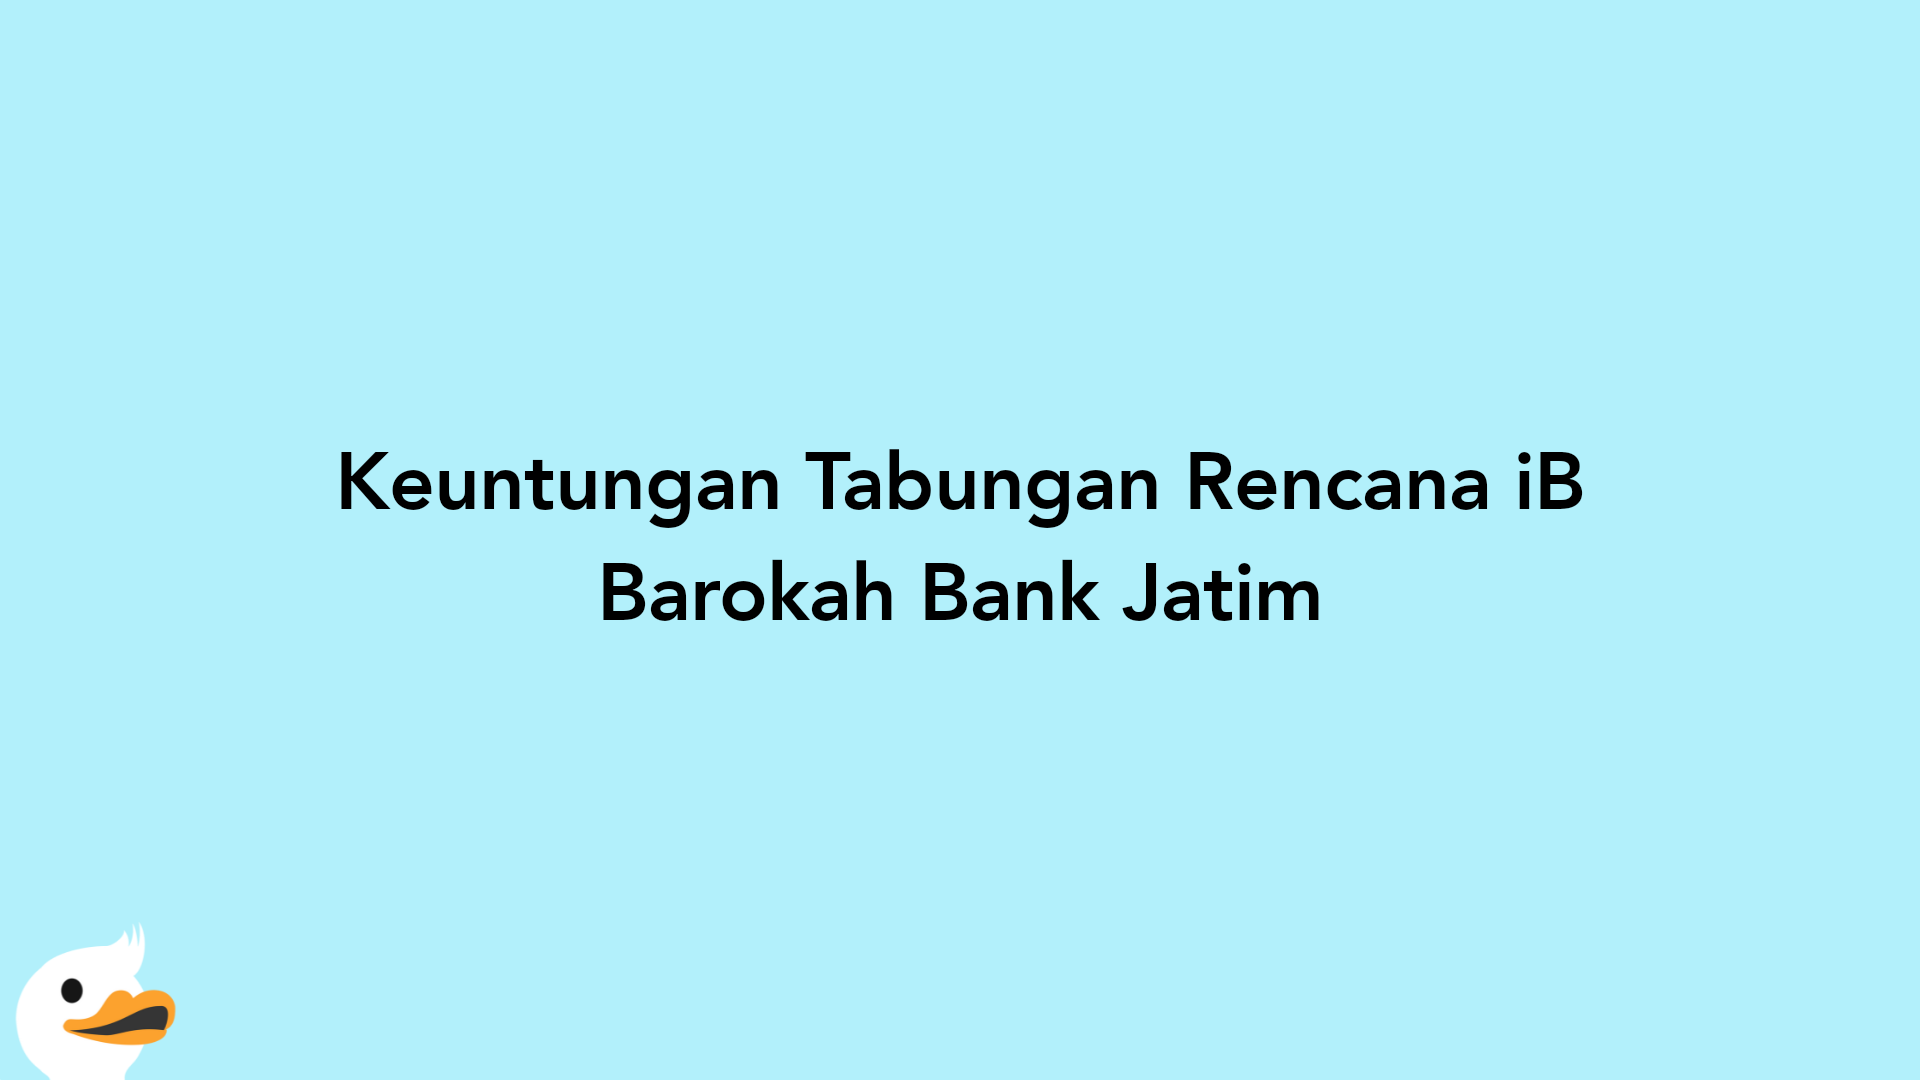 Keuntungan Tabungan Rencana iB Barokah Bank Jatim